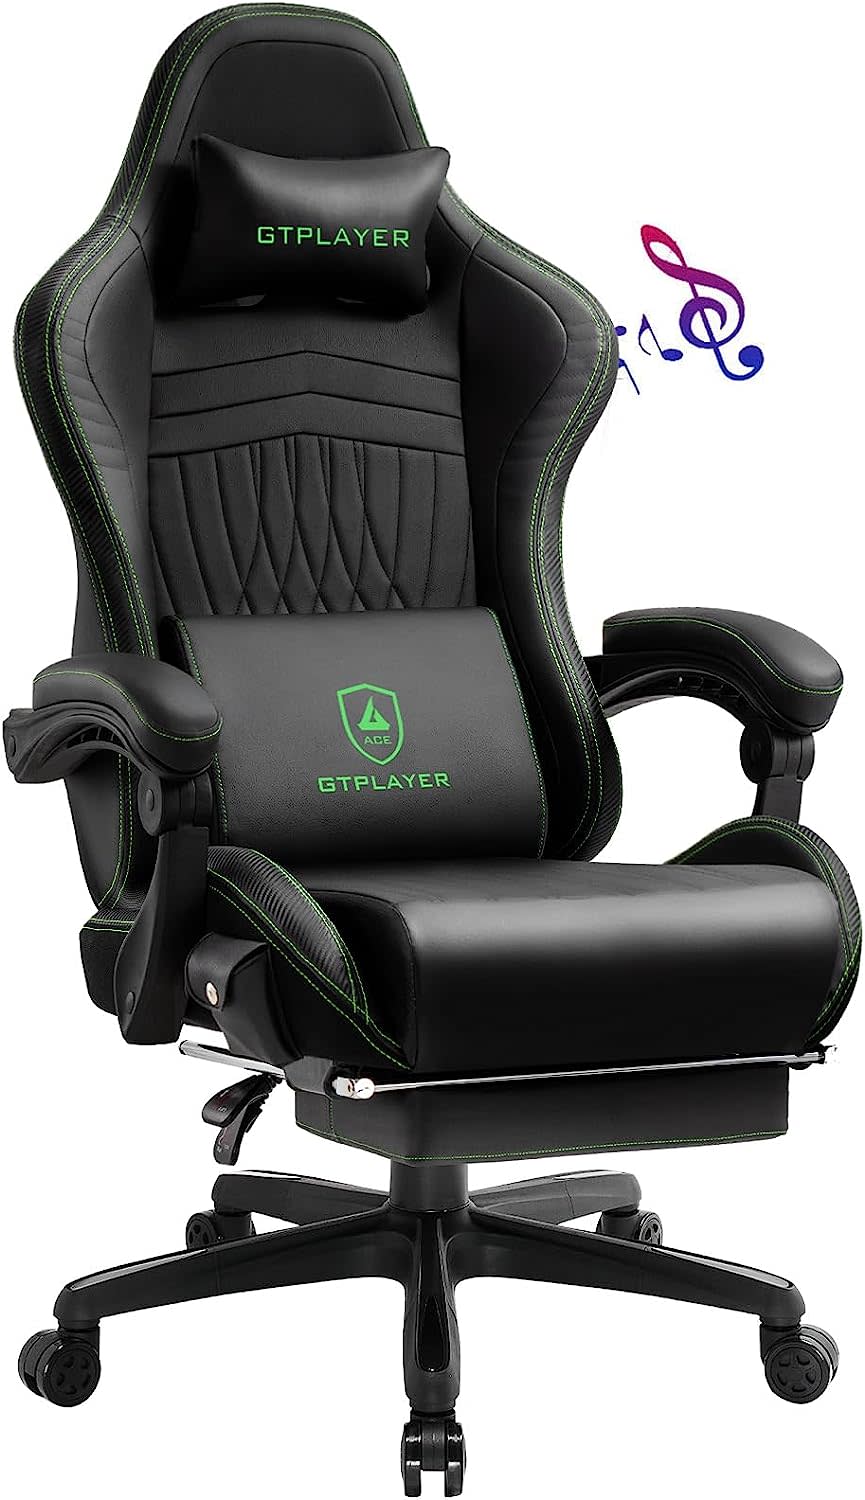 GTPlayer Gaming Chair in black